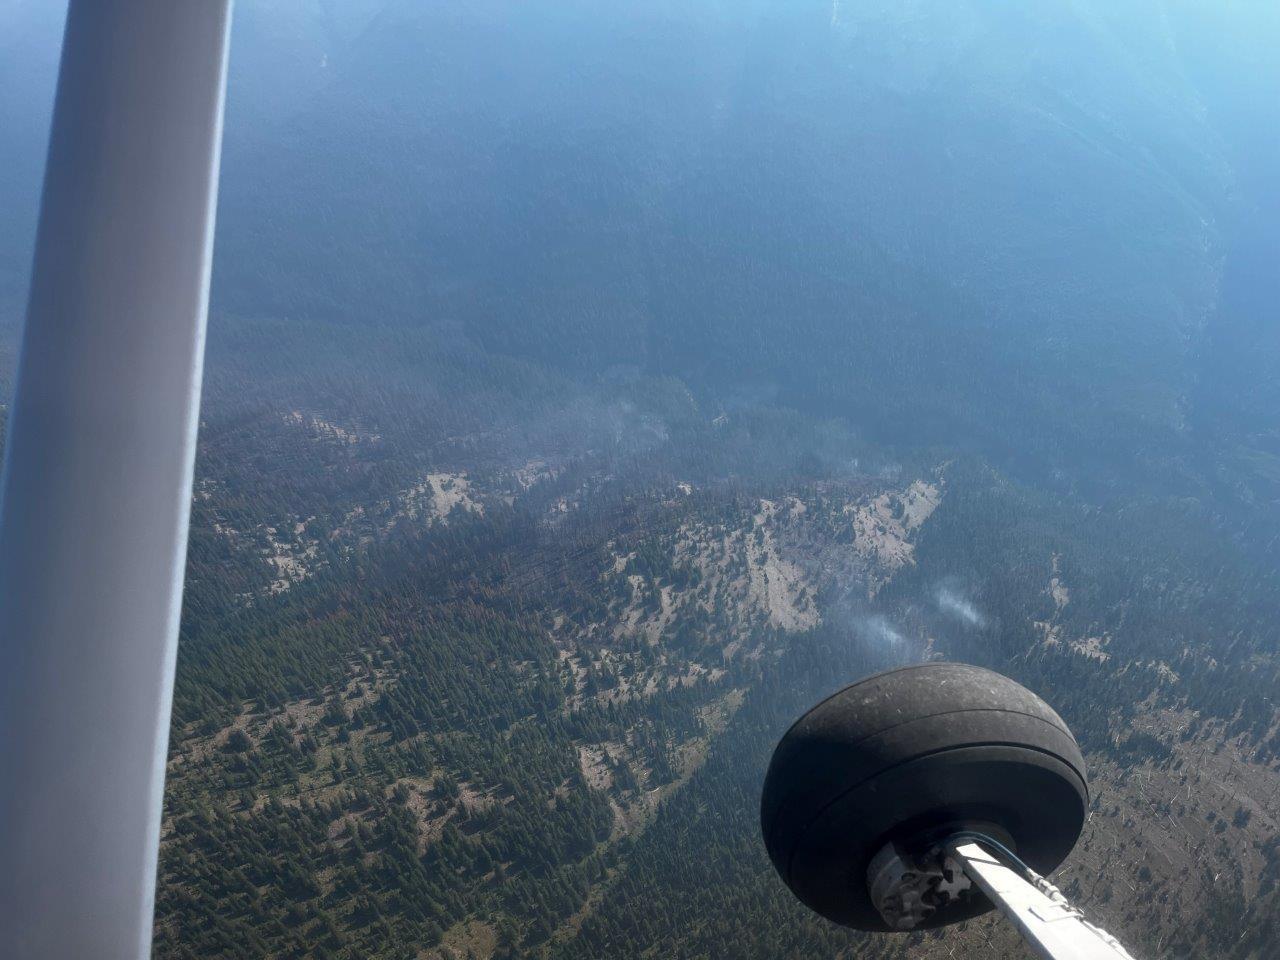 The Dean Creek Fire as seen looking northeast on 9/2/2022